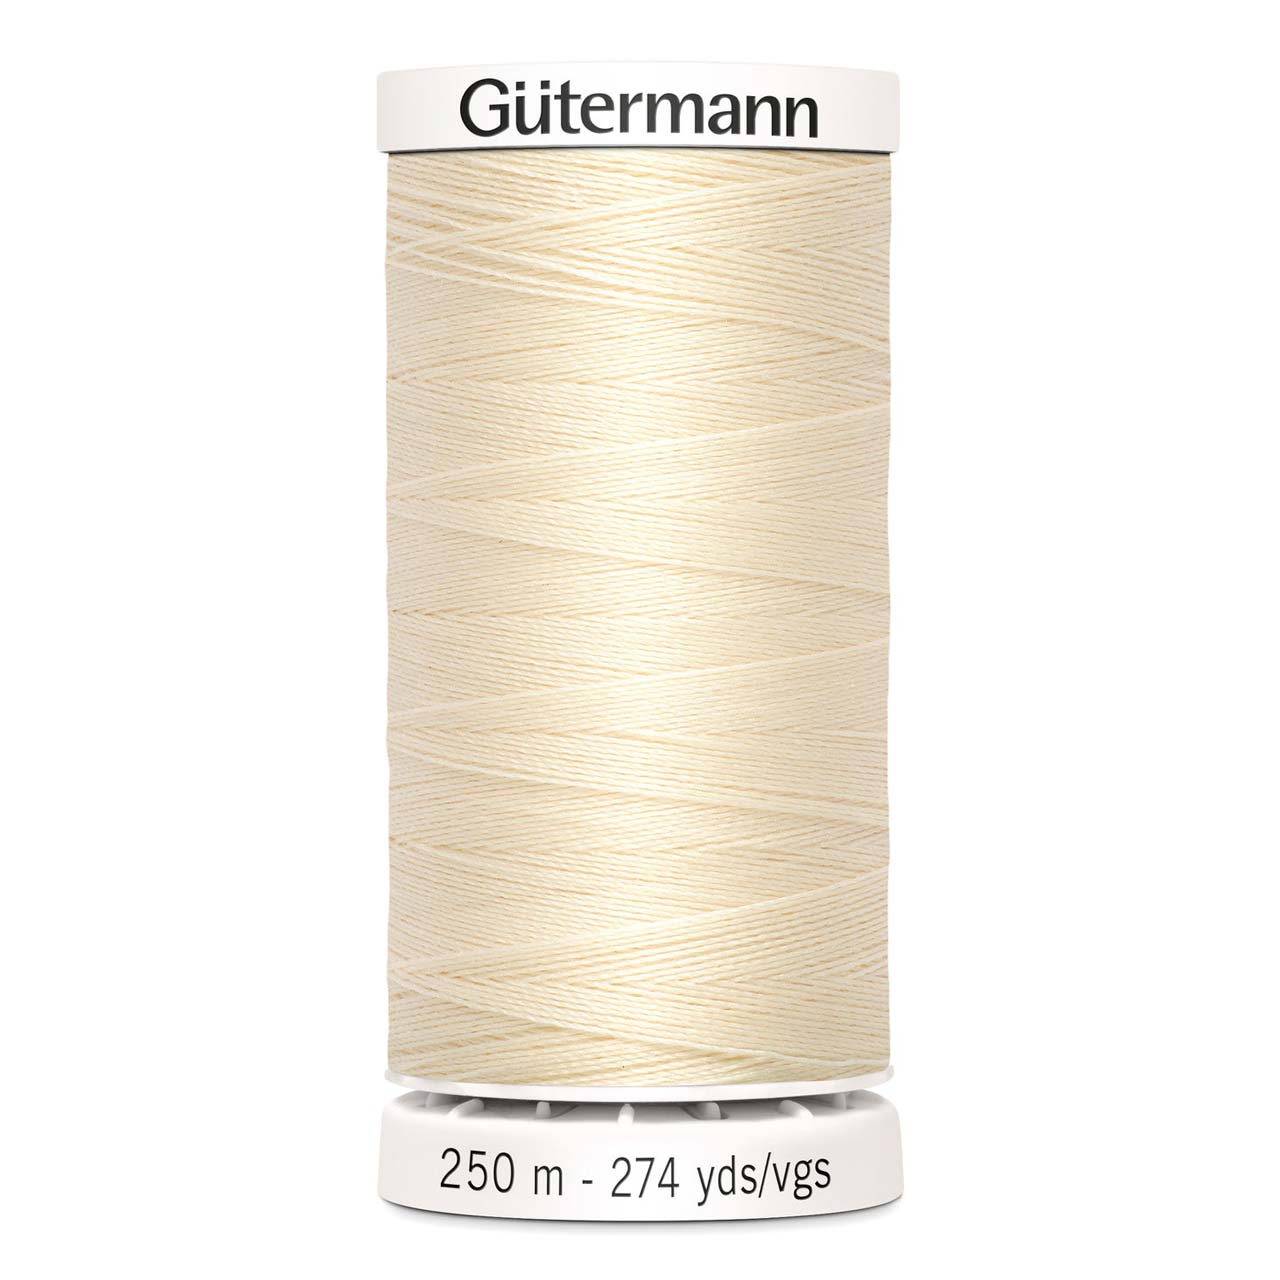 Gutermann thread 414 sewing thread 250 metres